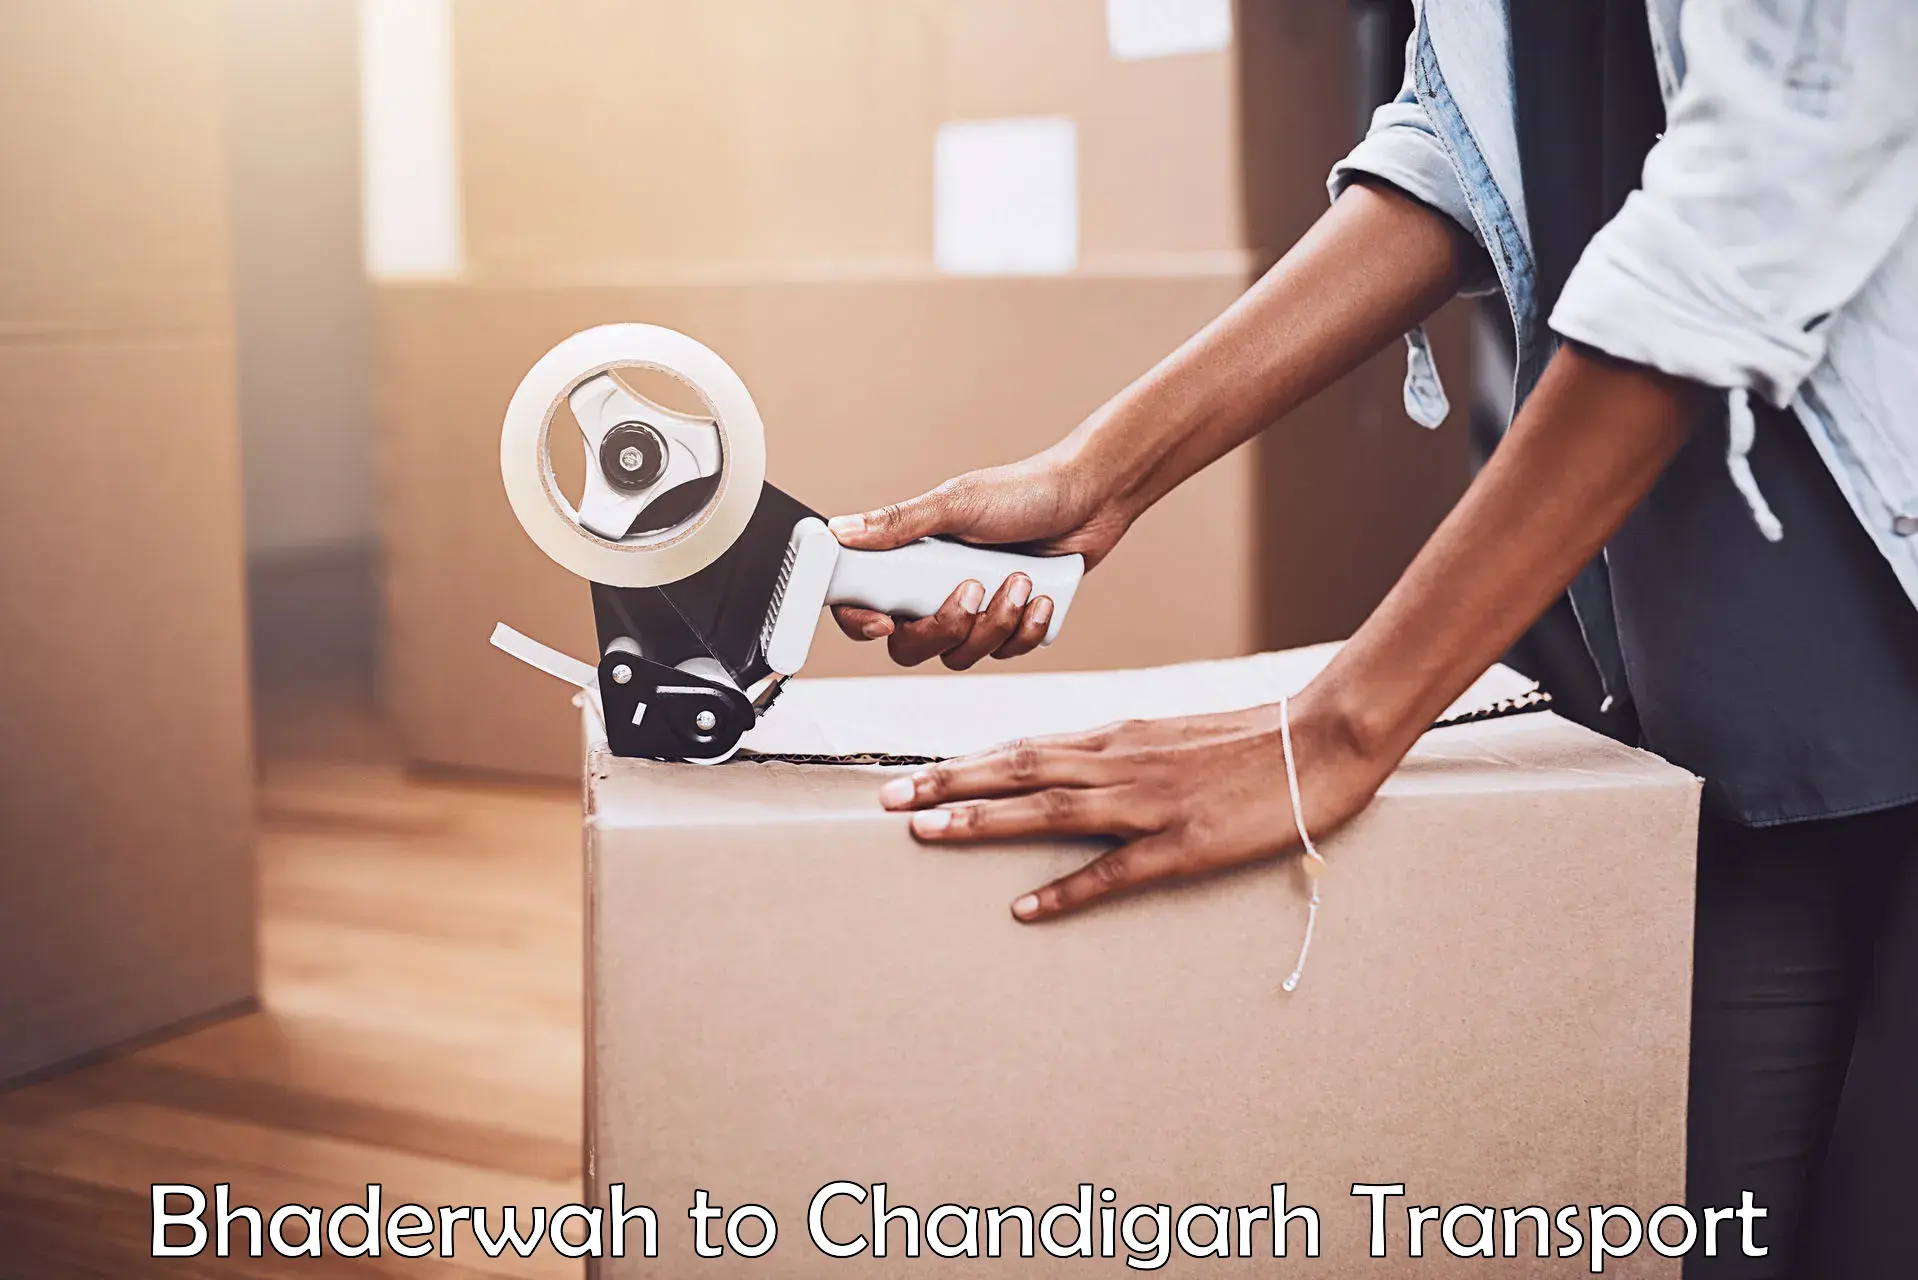 Truck transport companies in India Bhaderwah to Chandigarh